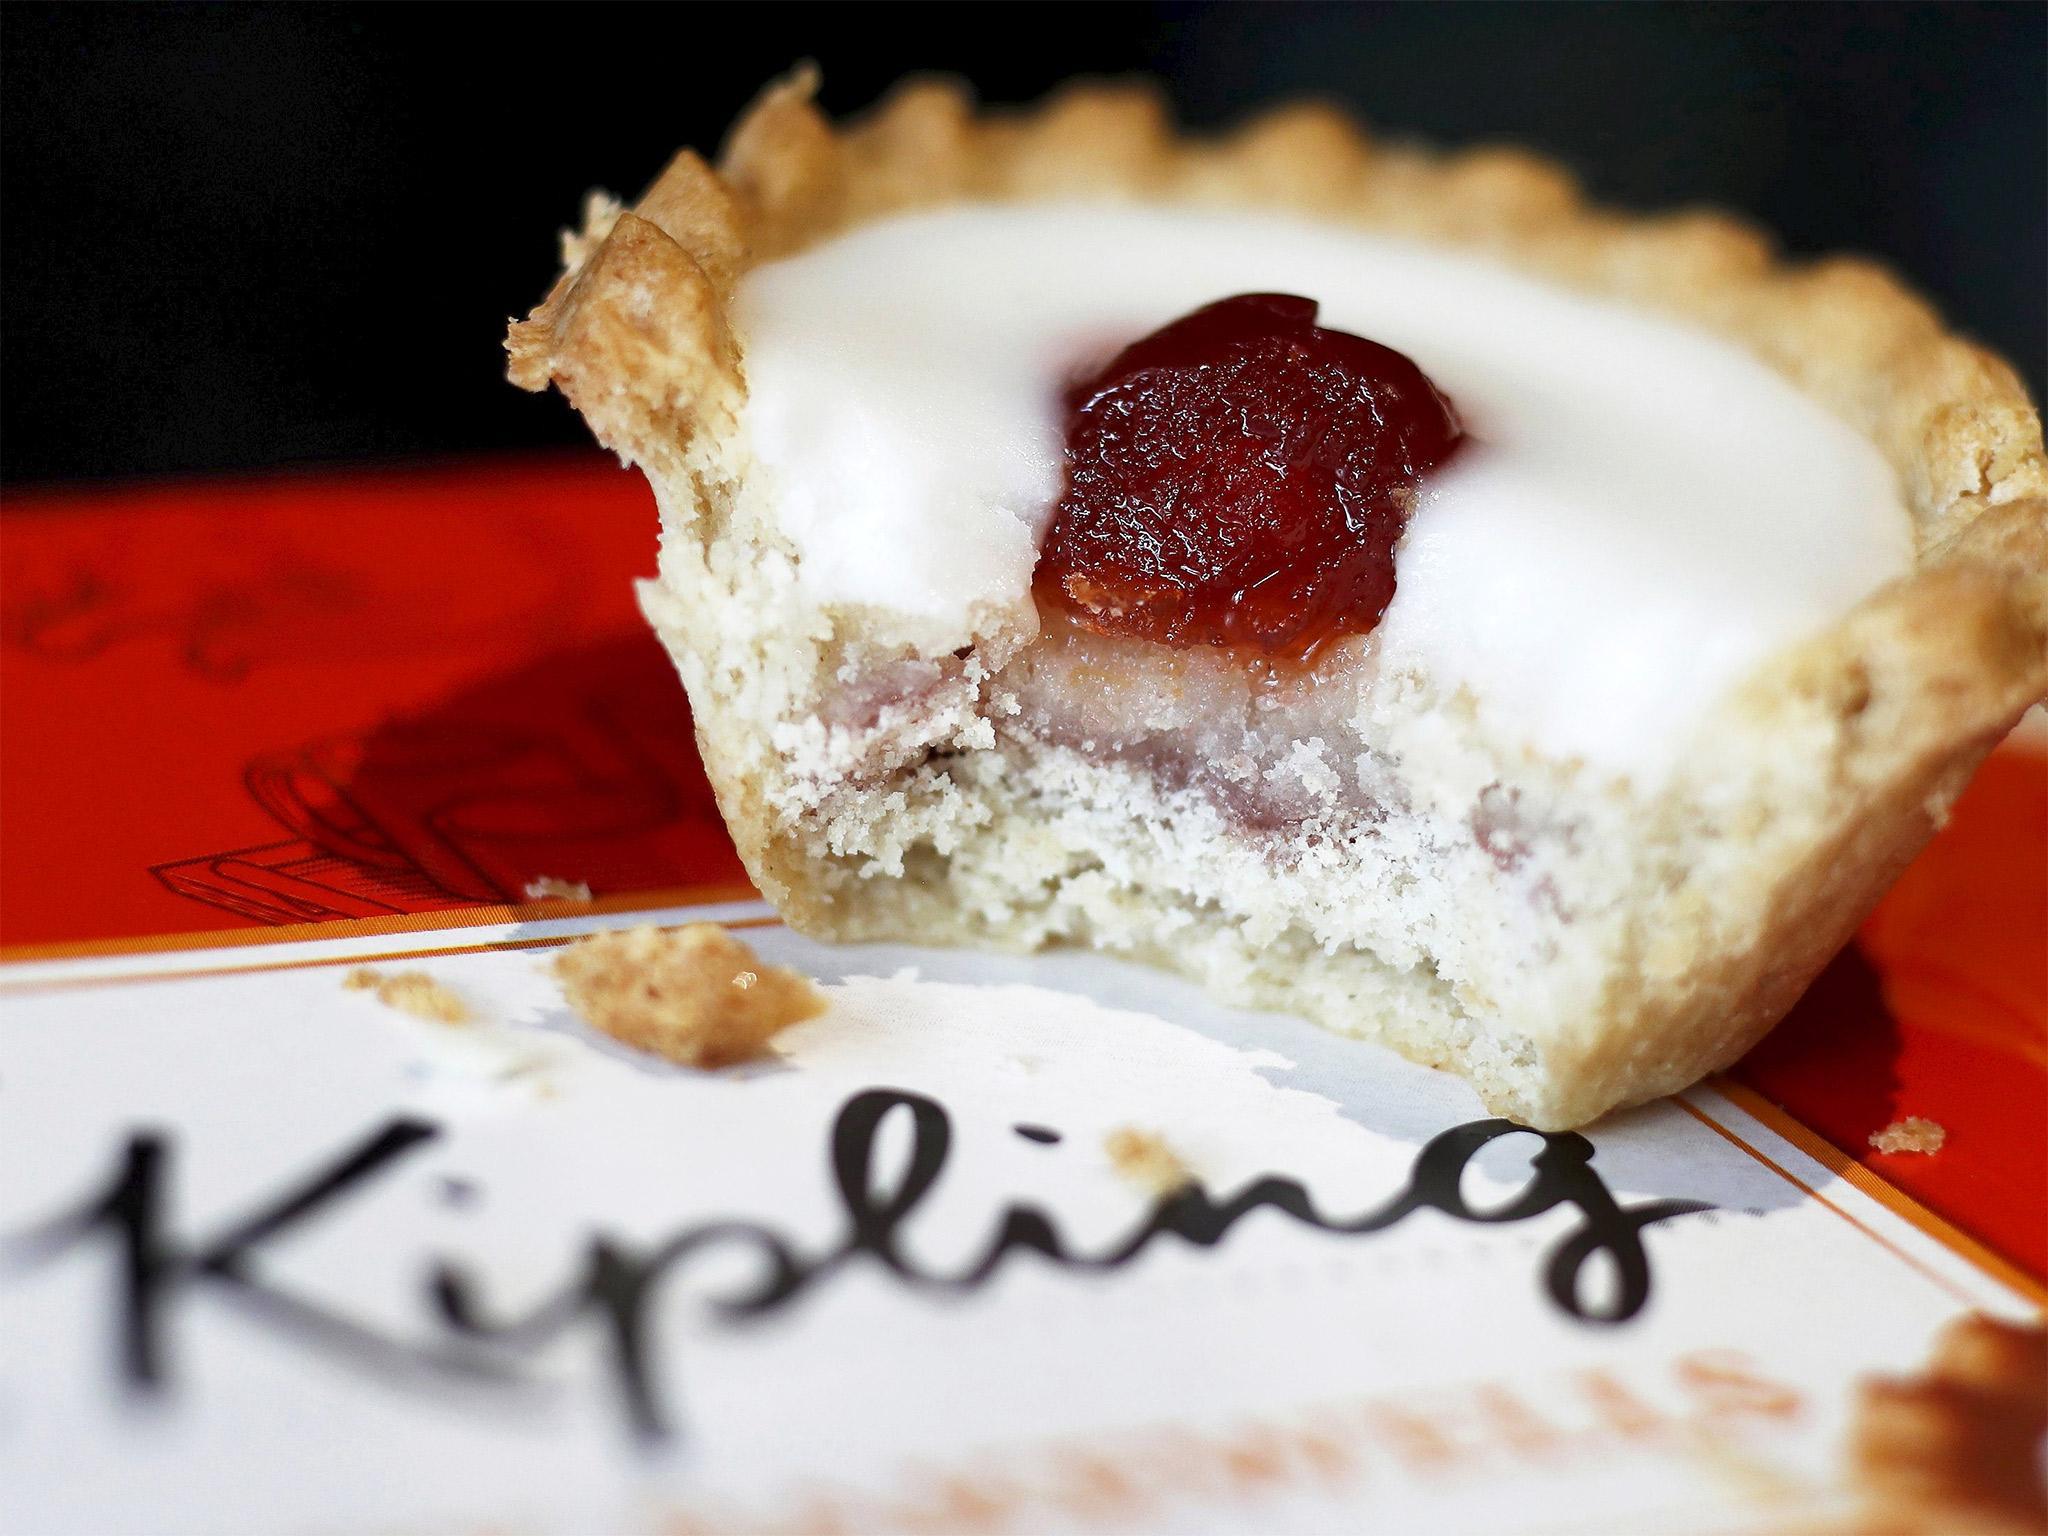 &#13;
Premier Foods has Mr Kipling, Bisto and Cadbury cakes in its stable&#13;